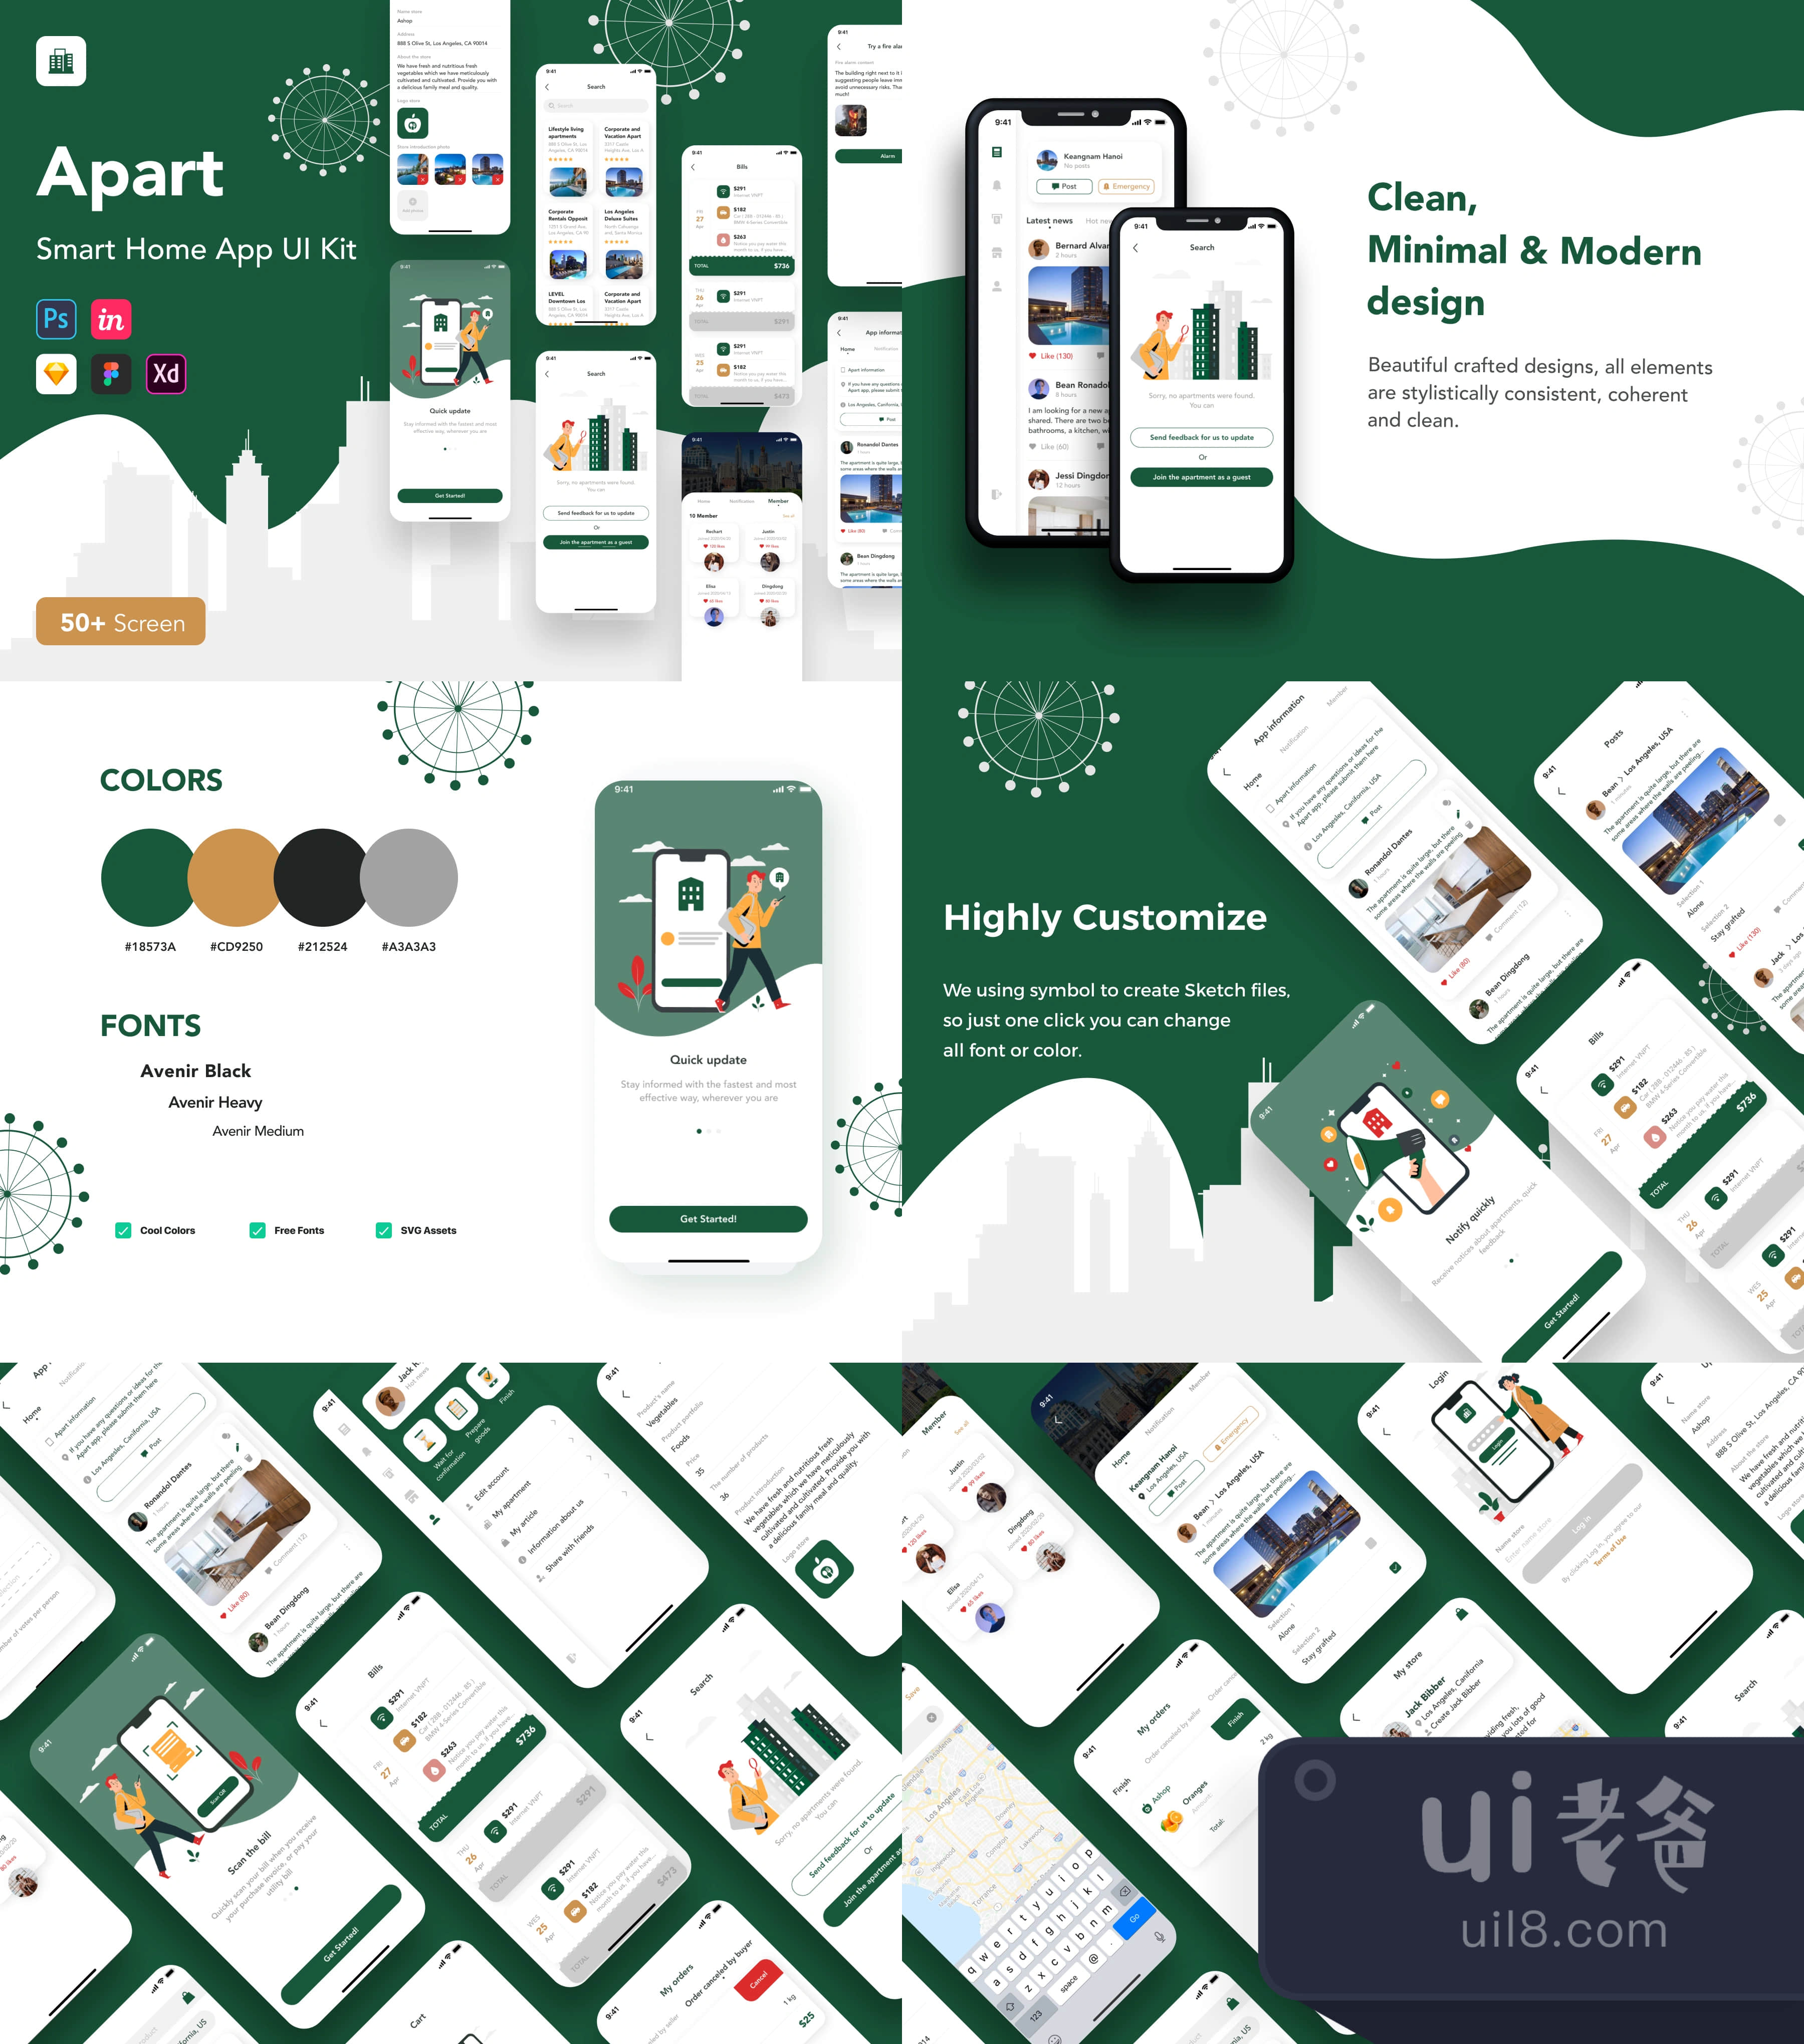 Apart - 智能家居应用UI套件 (Apart - Smart Home App UI Kit)插图